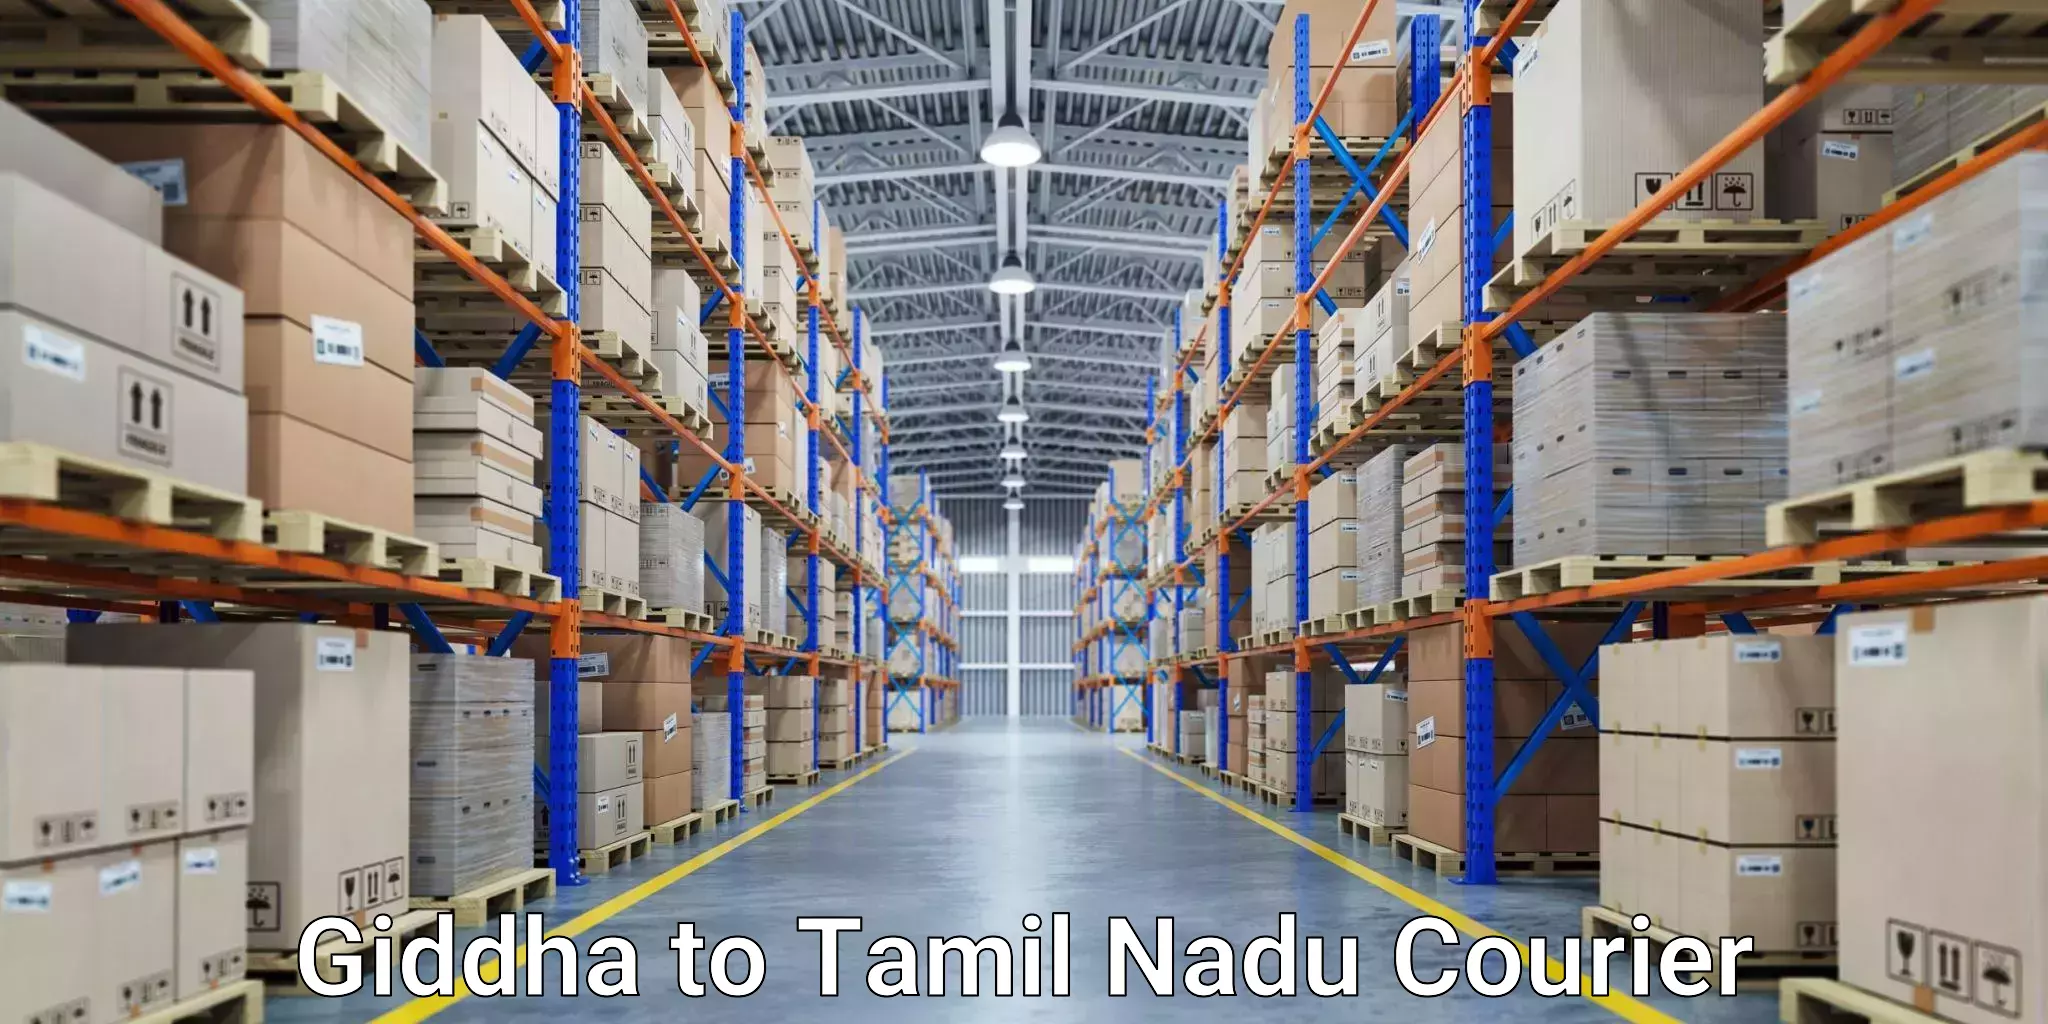 Customer-centric shipping Giddha to Tamil Nadu